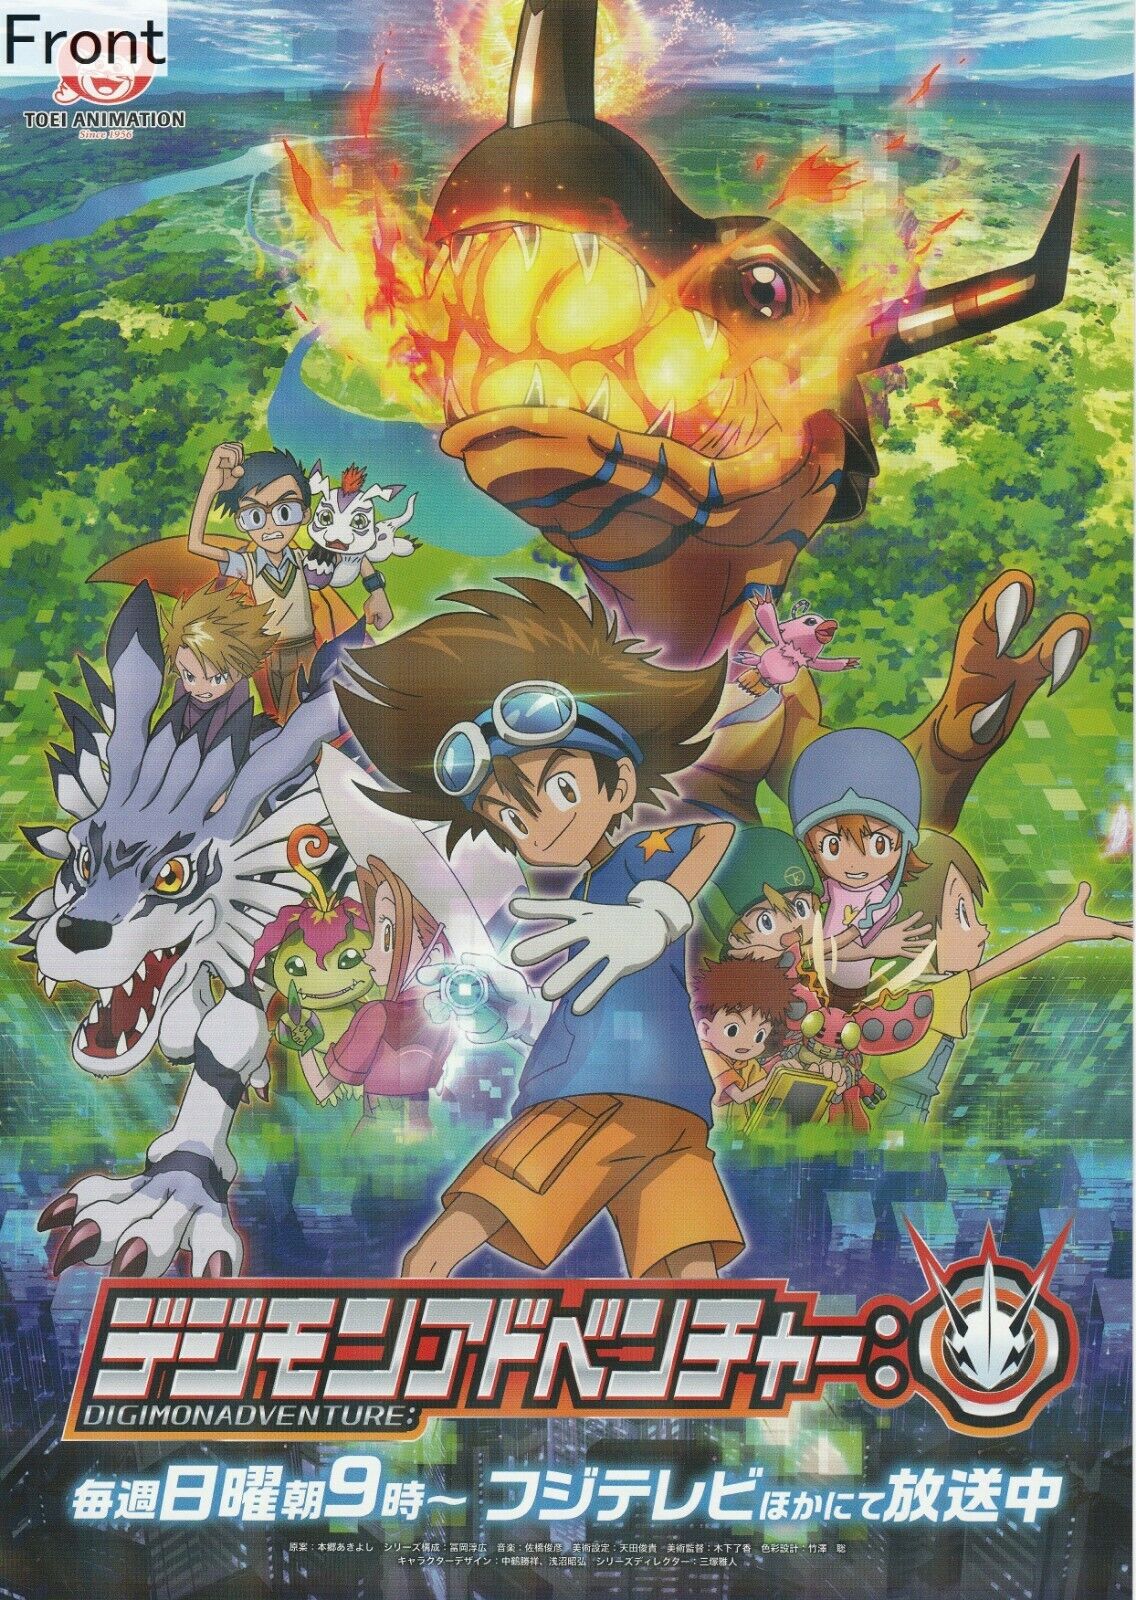 Digimon Adventure (2020 TV series) Promotional Poster